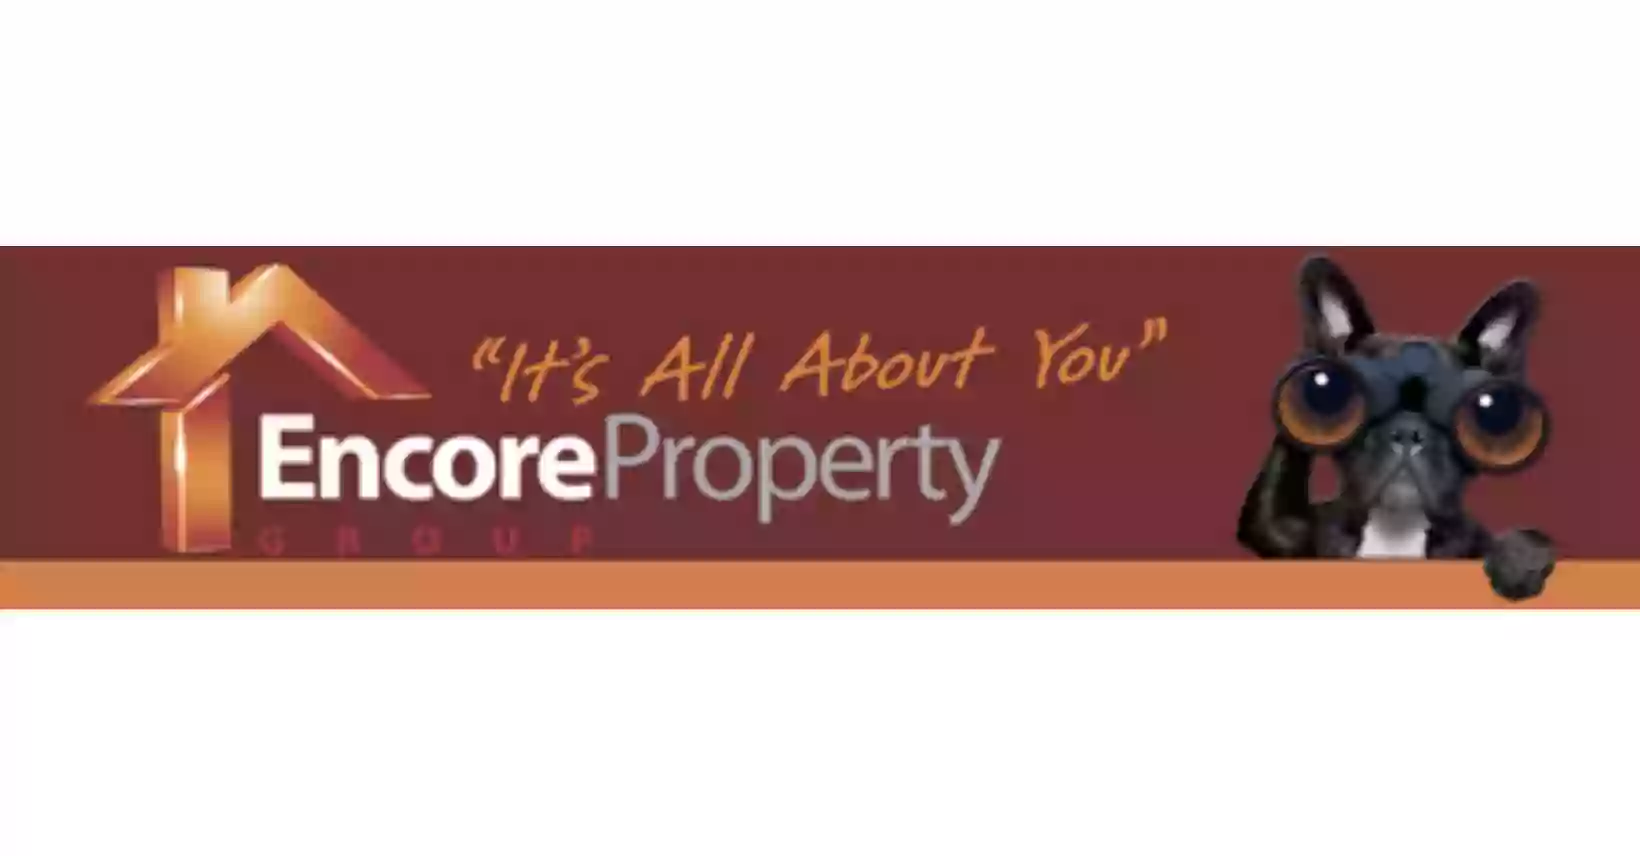 Encore Property Group